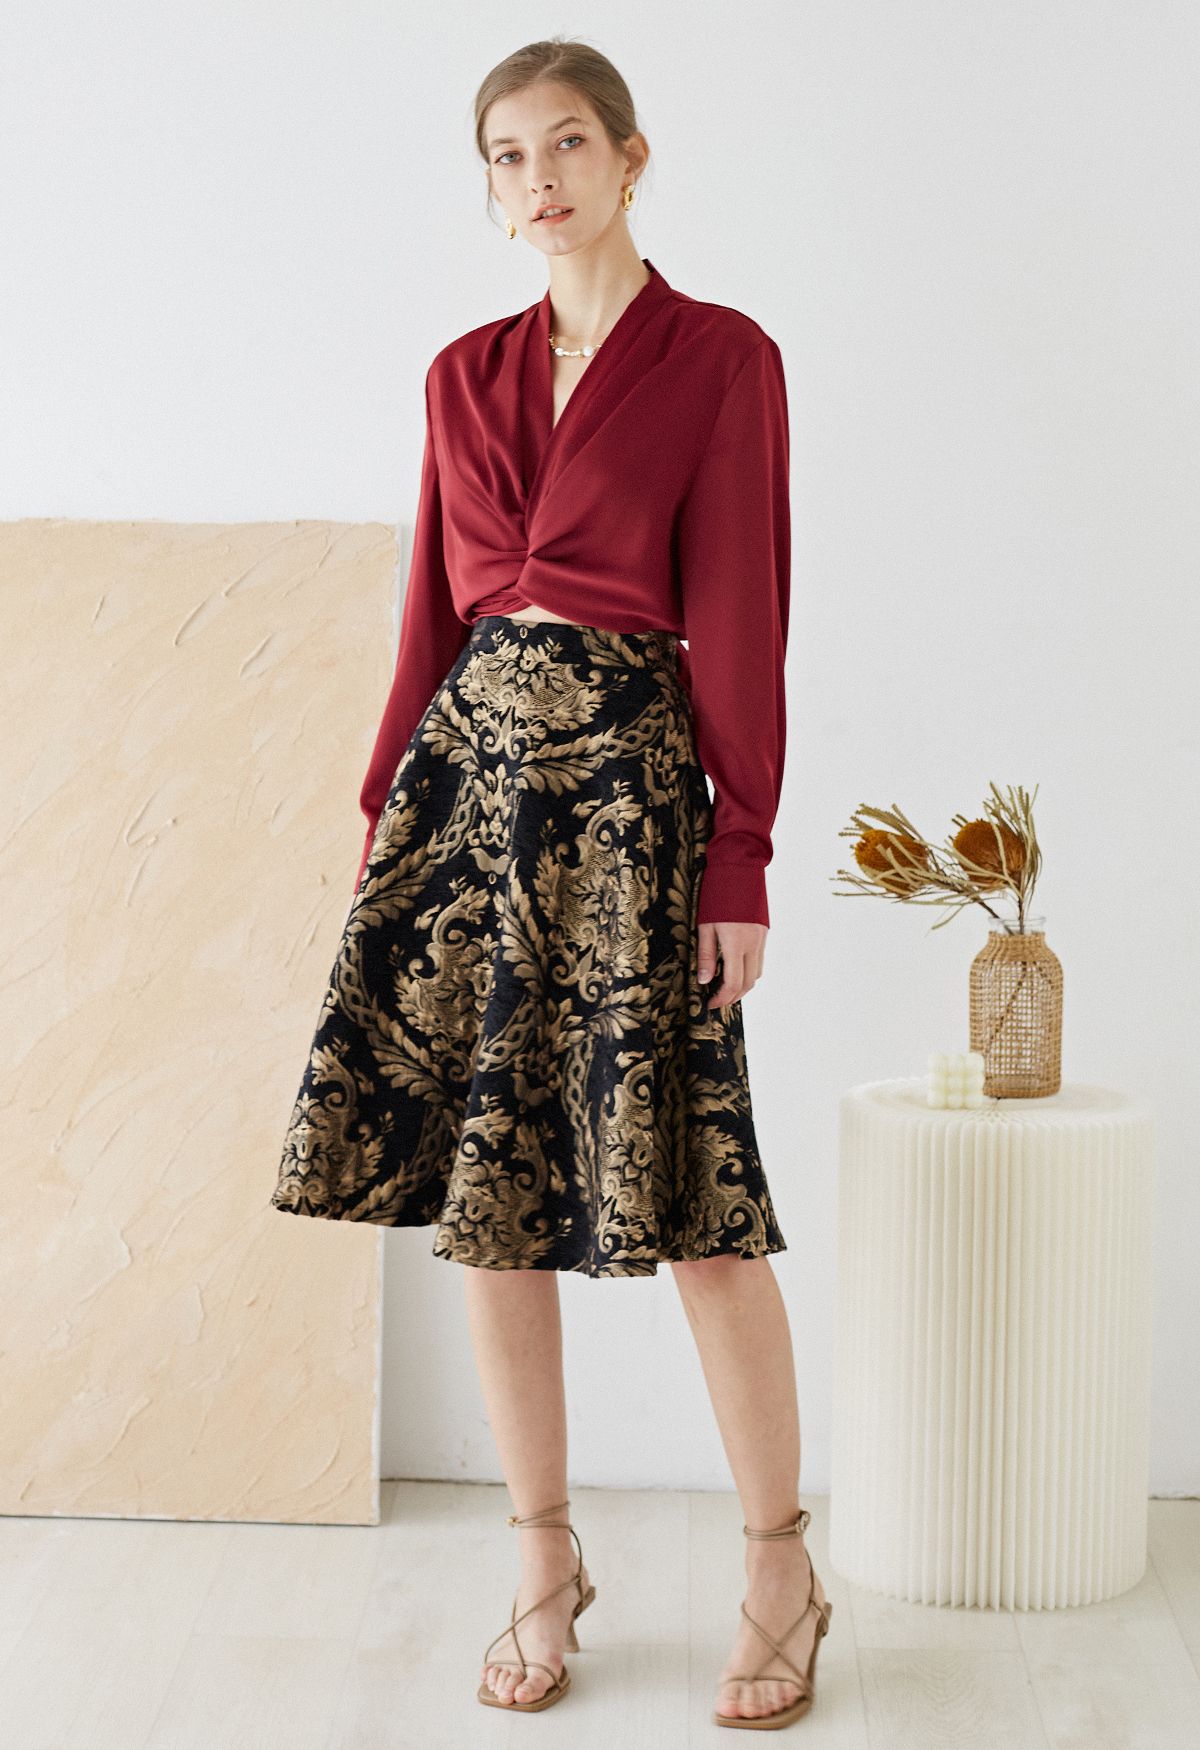 Shop Chicwish Flower Patterns Medium Midi Skirts (B20151006025) by